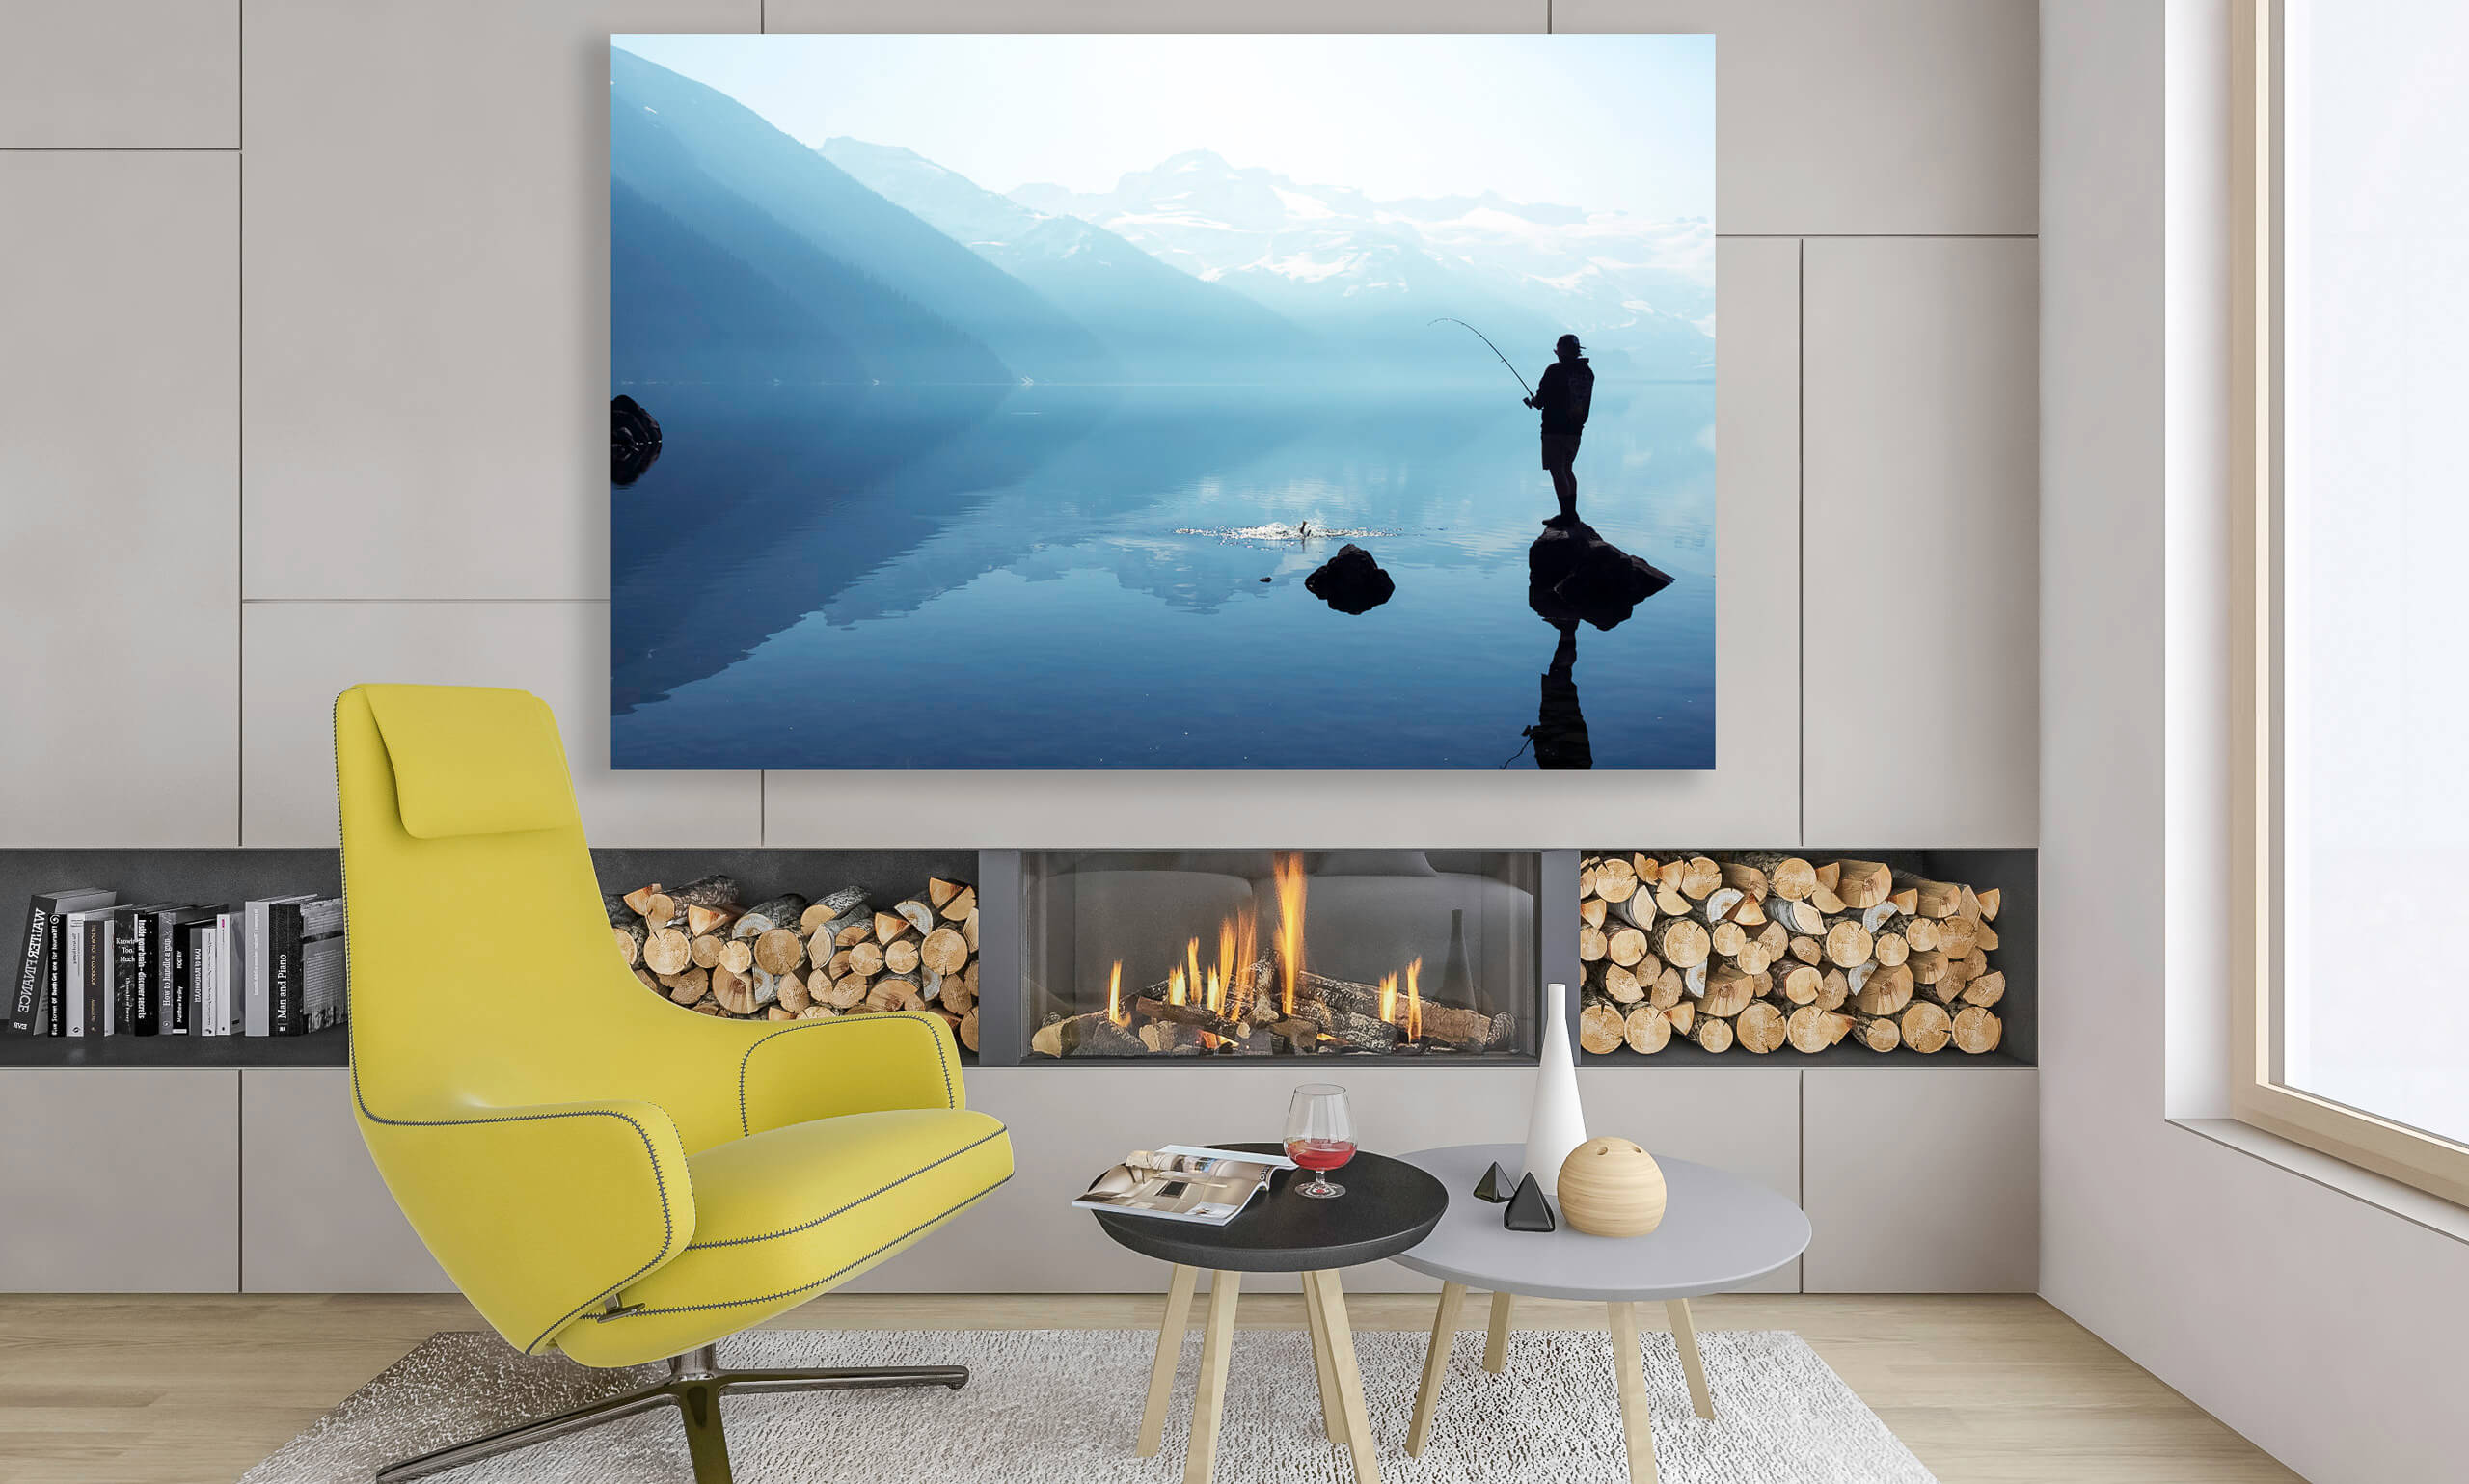 A metallic aluminum photo mount hangs above a living room fireplace